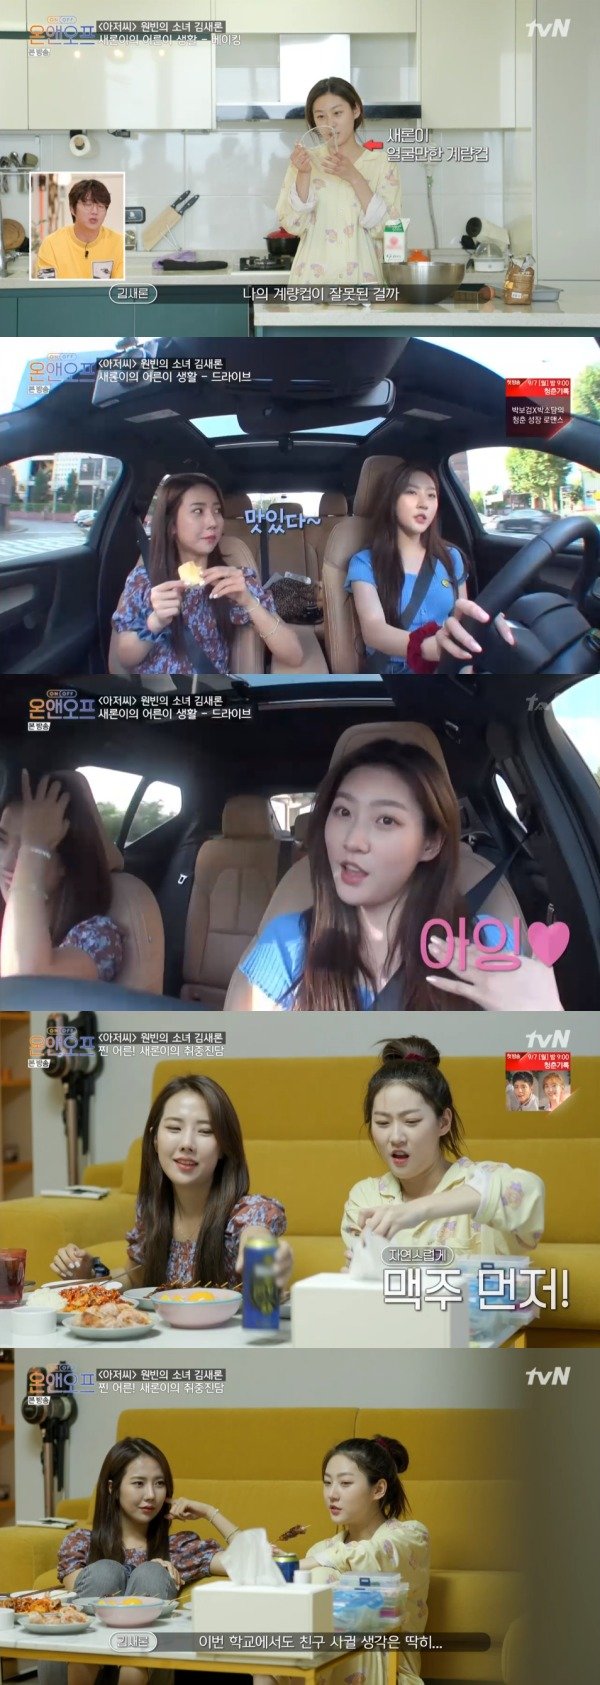 tvN ‘온앤오프’ 방송 화면 캡처